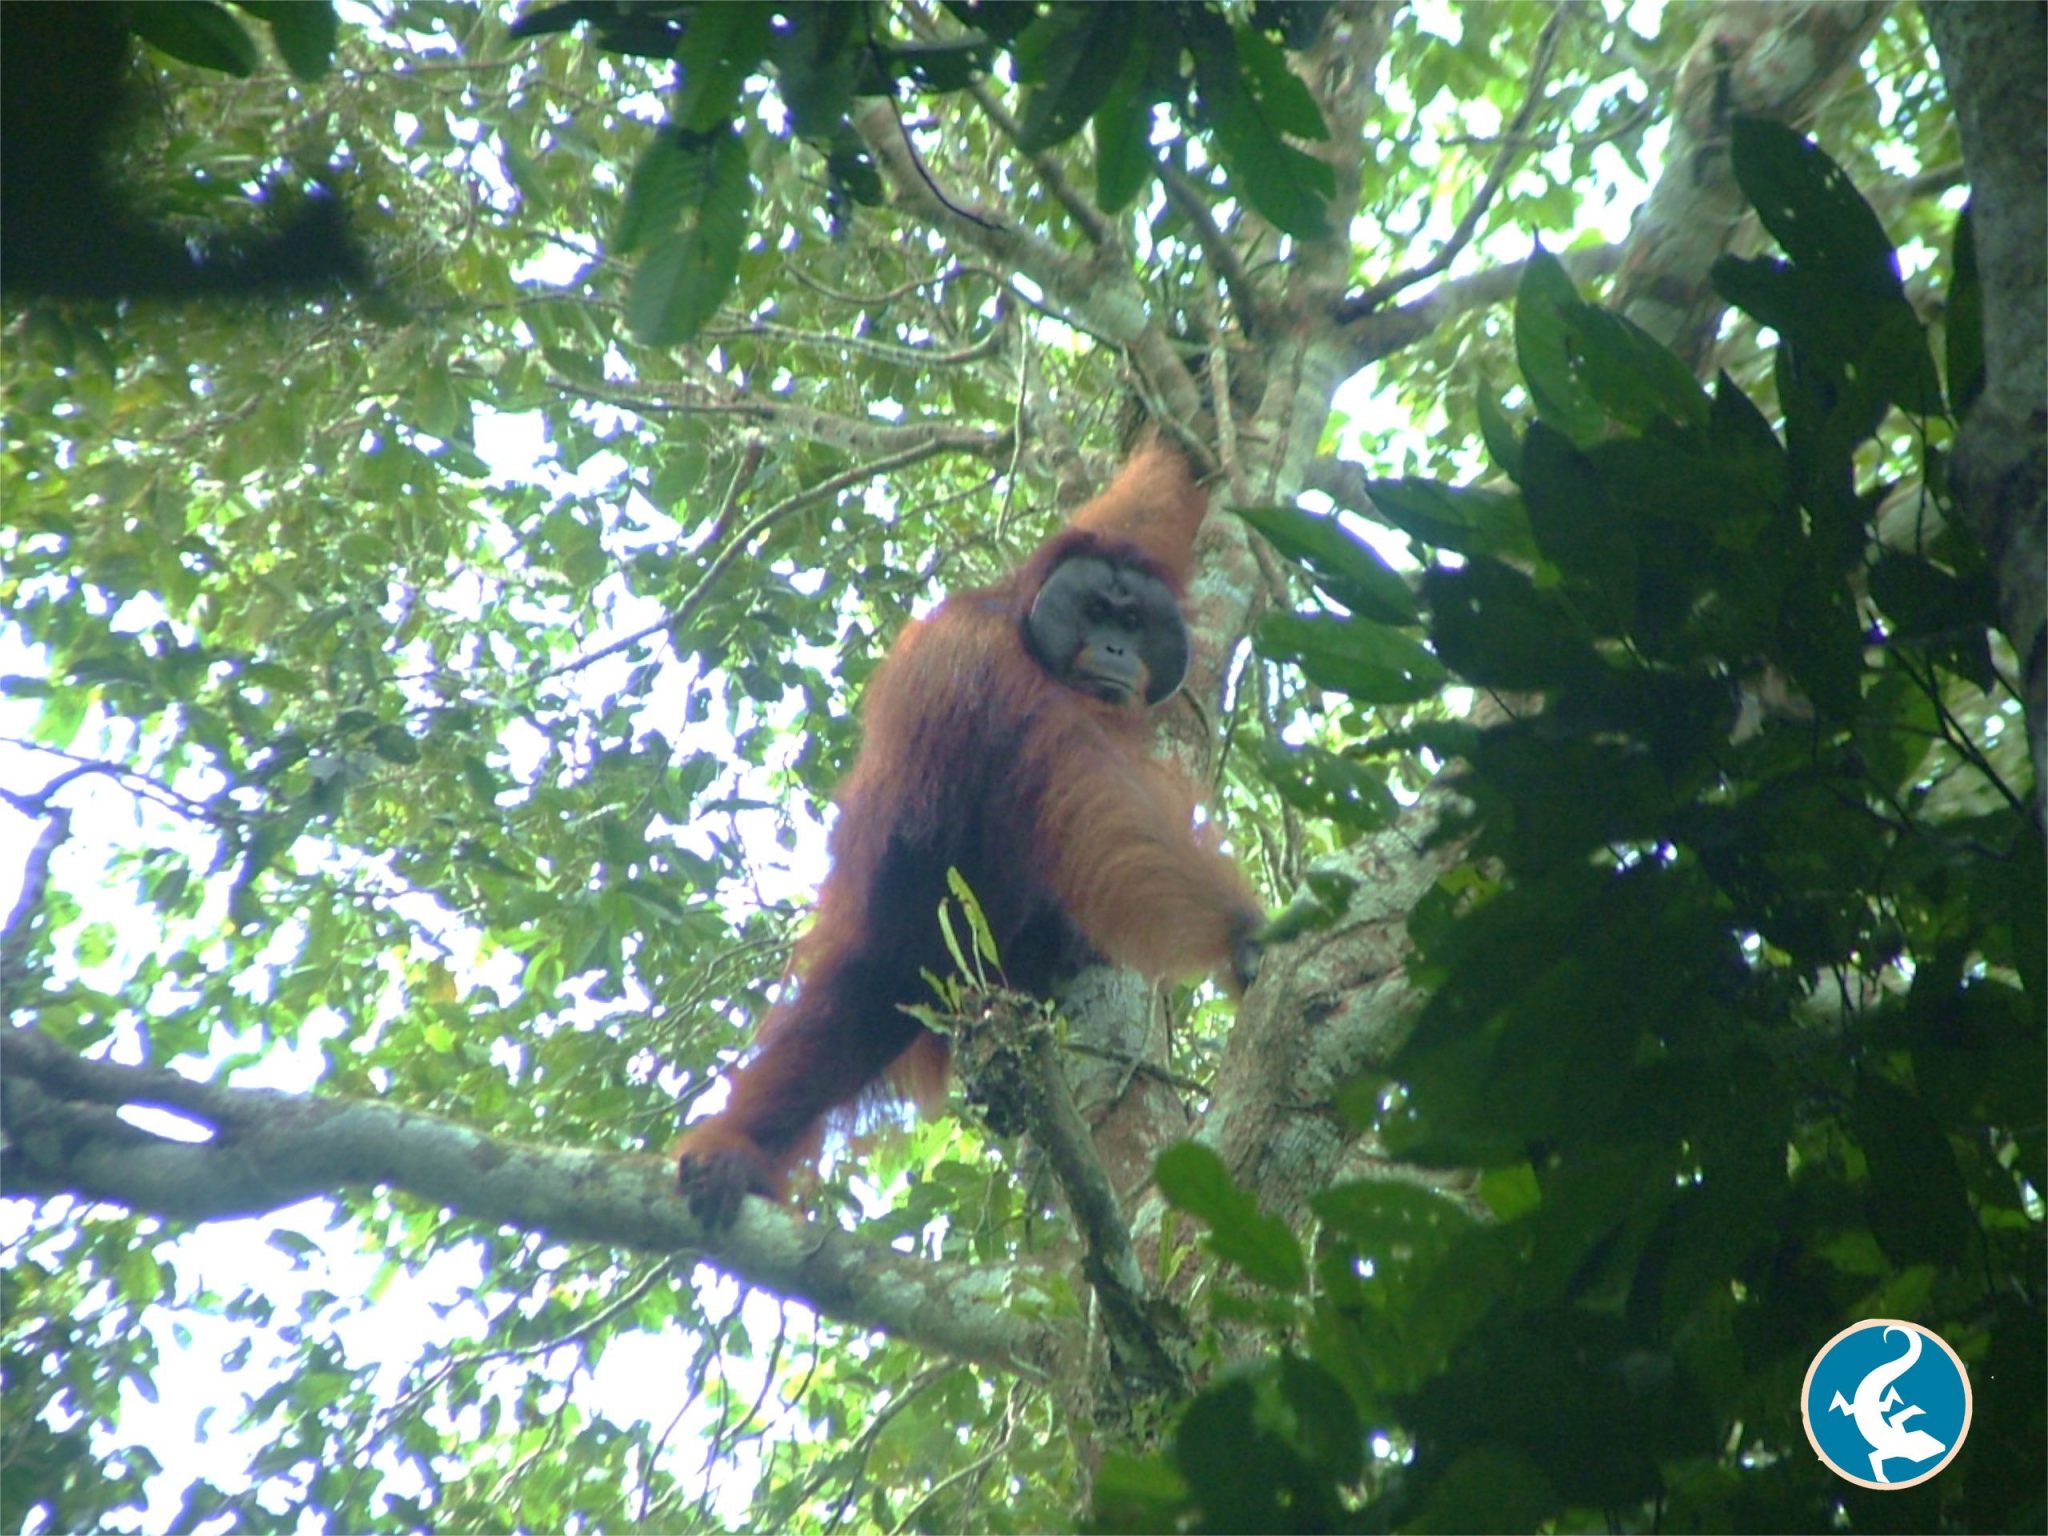 Bornean orangutan in tree in the wild